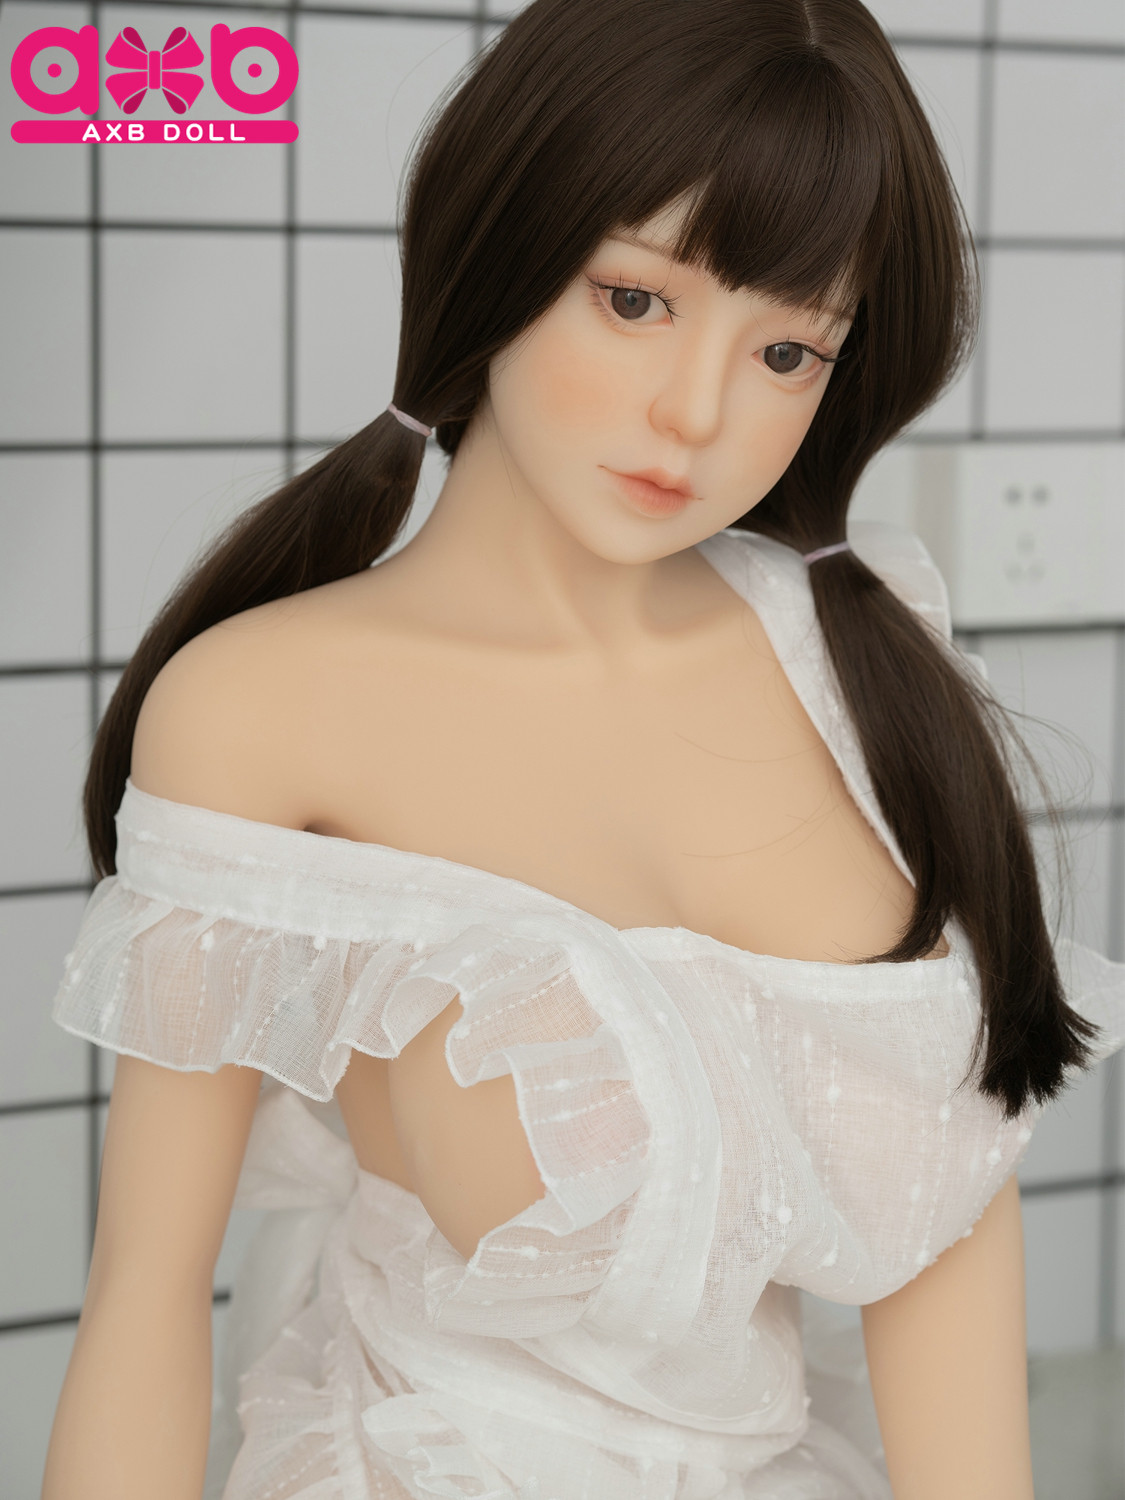 AXBDOLL 140cm A56# TPE Big Breast Sex Doll Love Doll For Men - 画像をクリックして閉じます